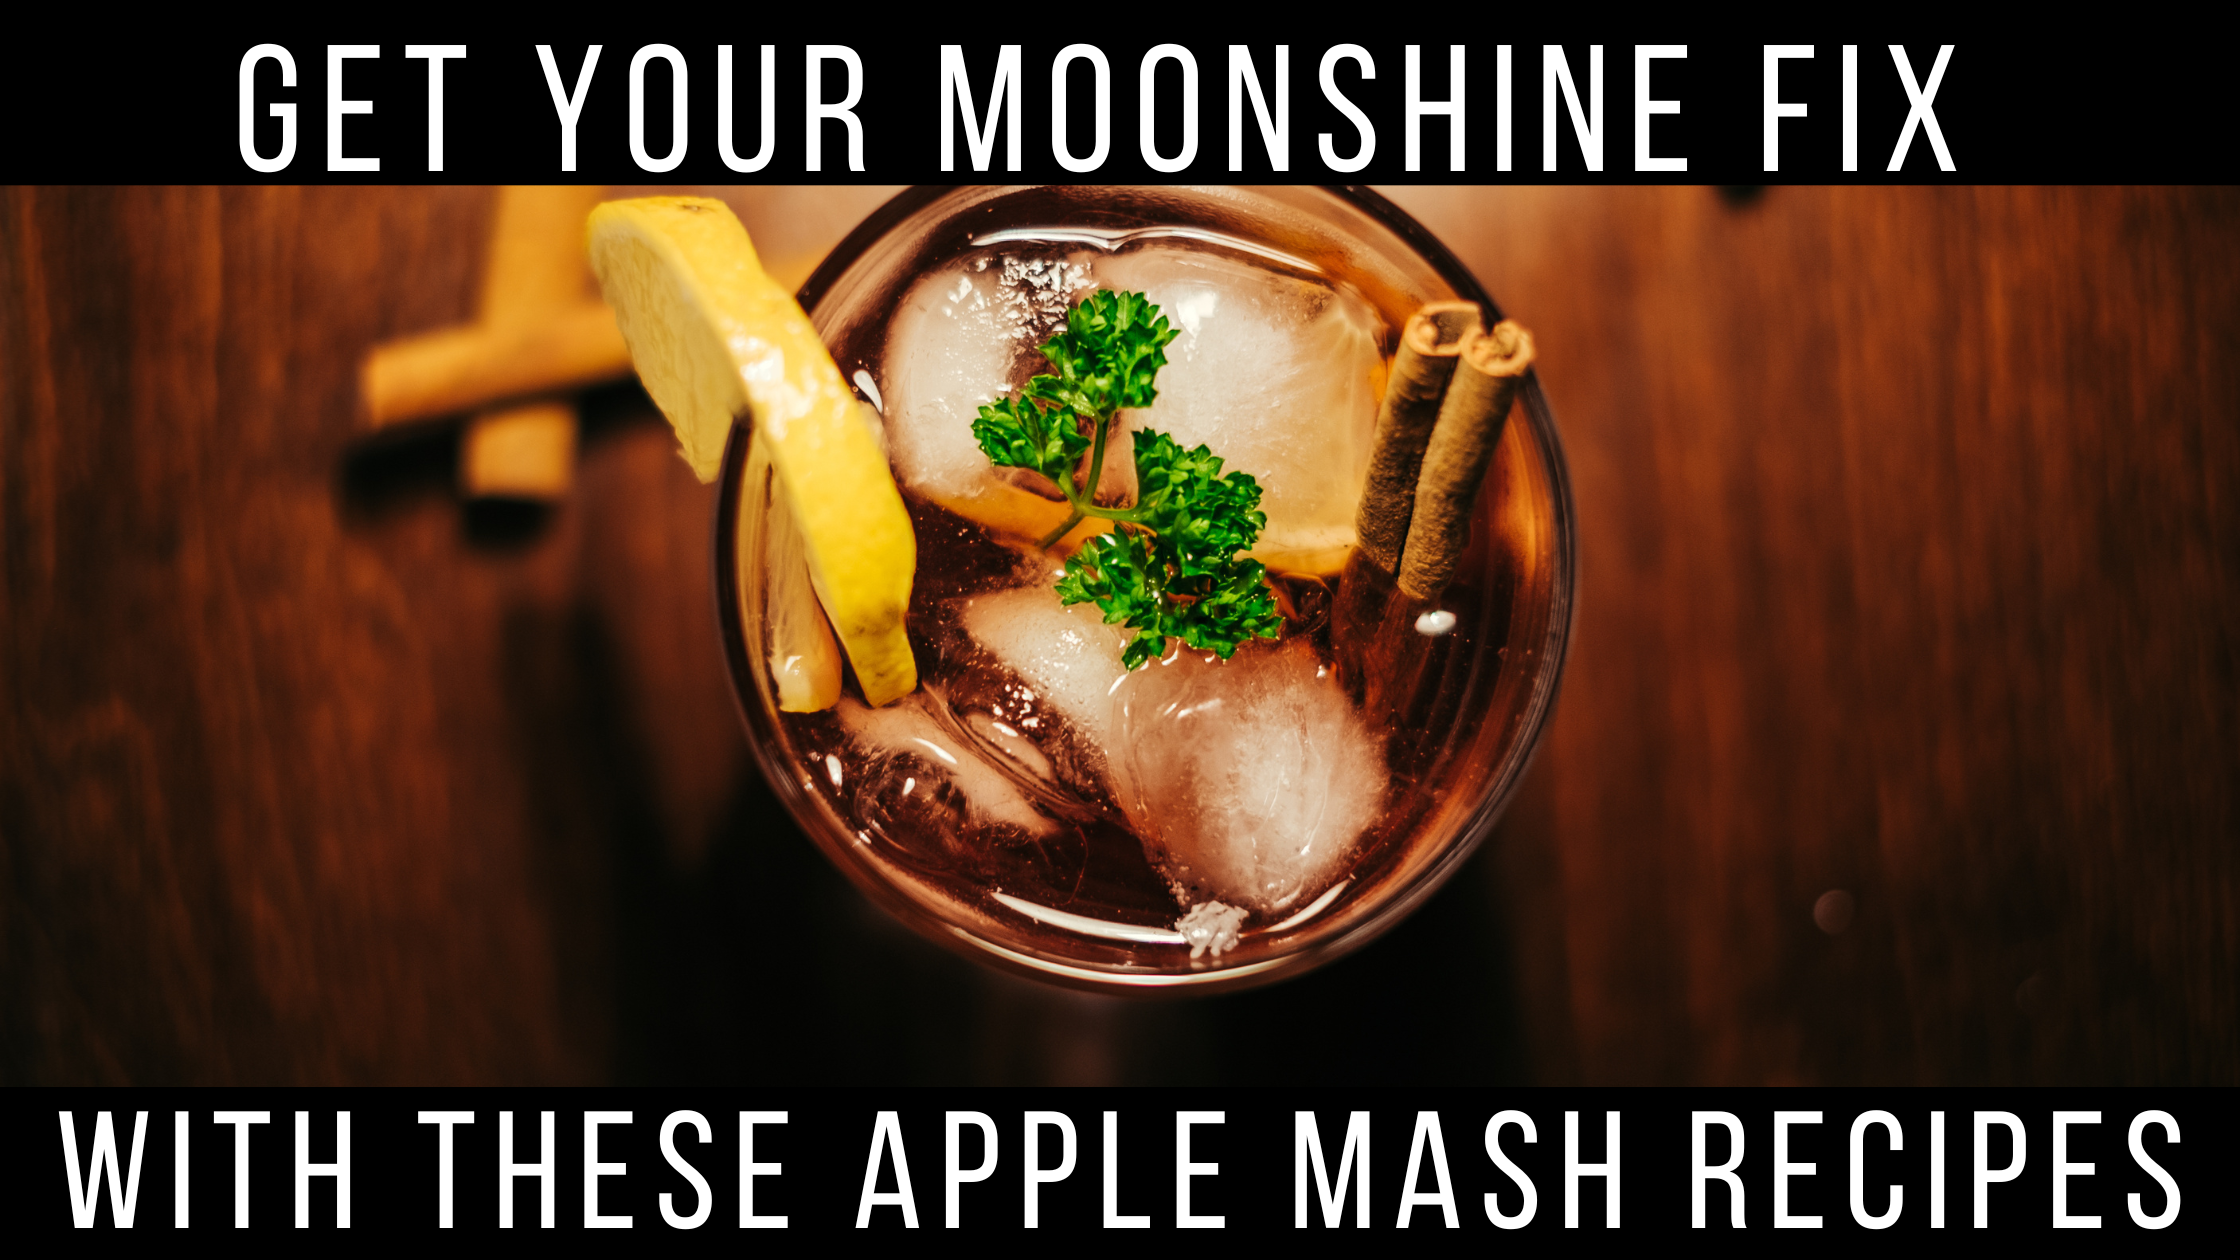 Apple Mash Recipes